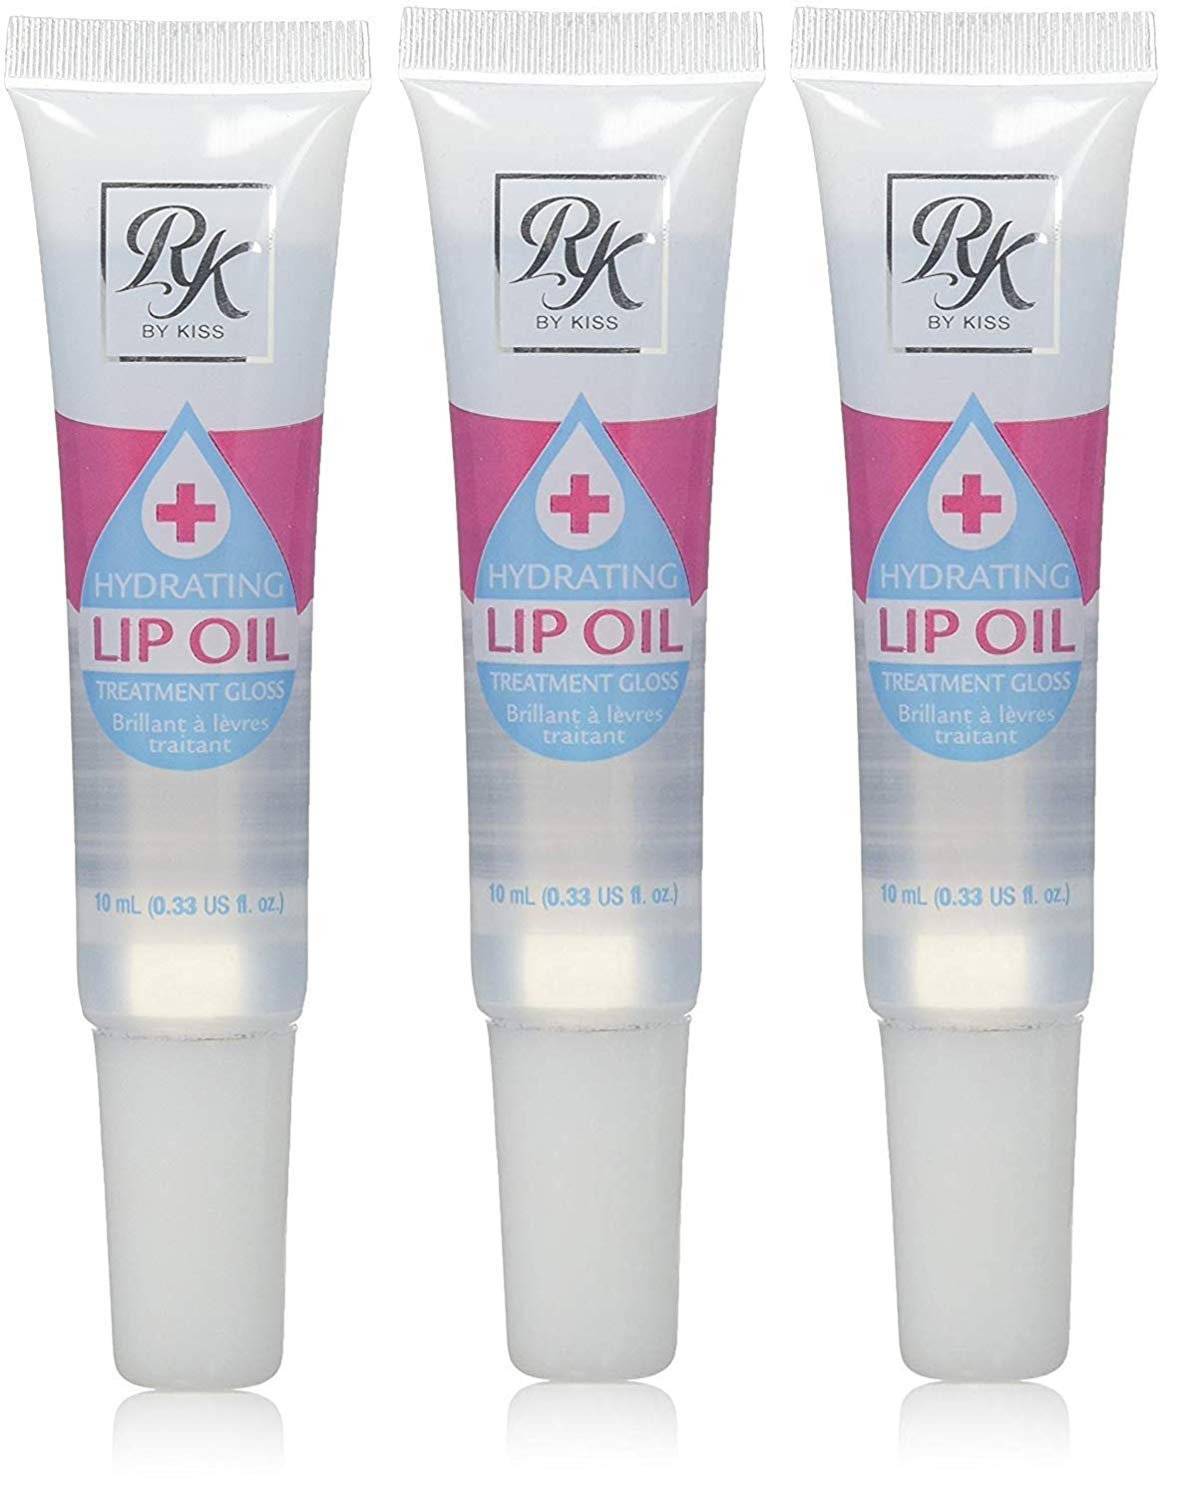 RK Hydrating Lip Oil